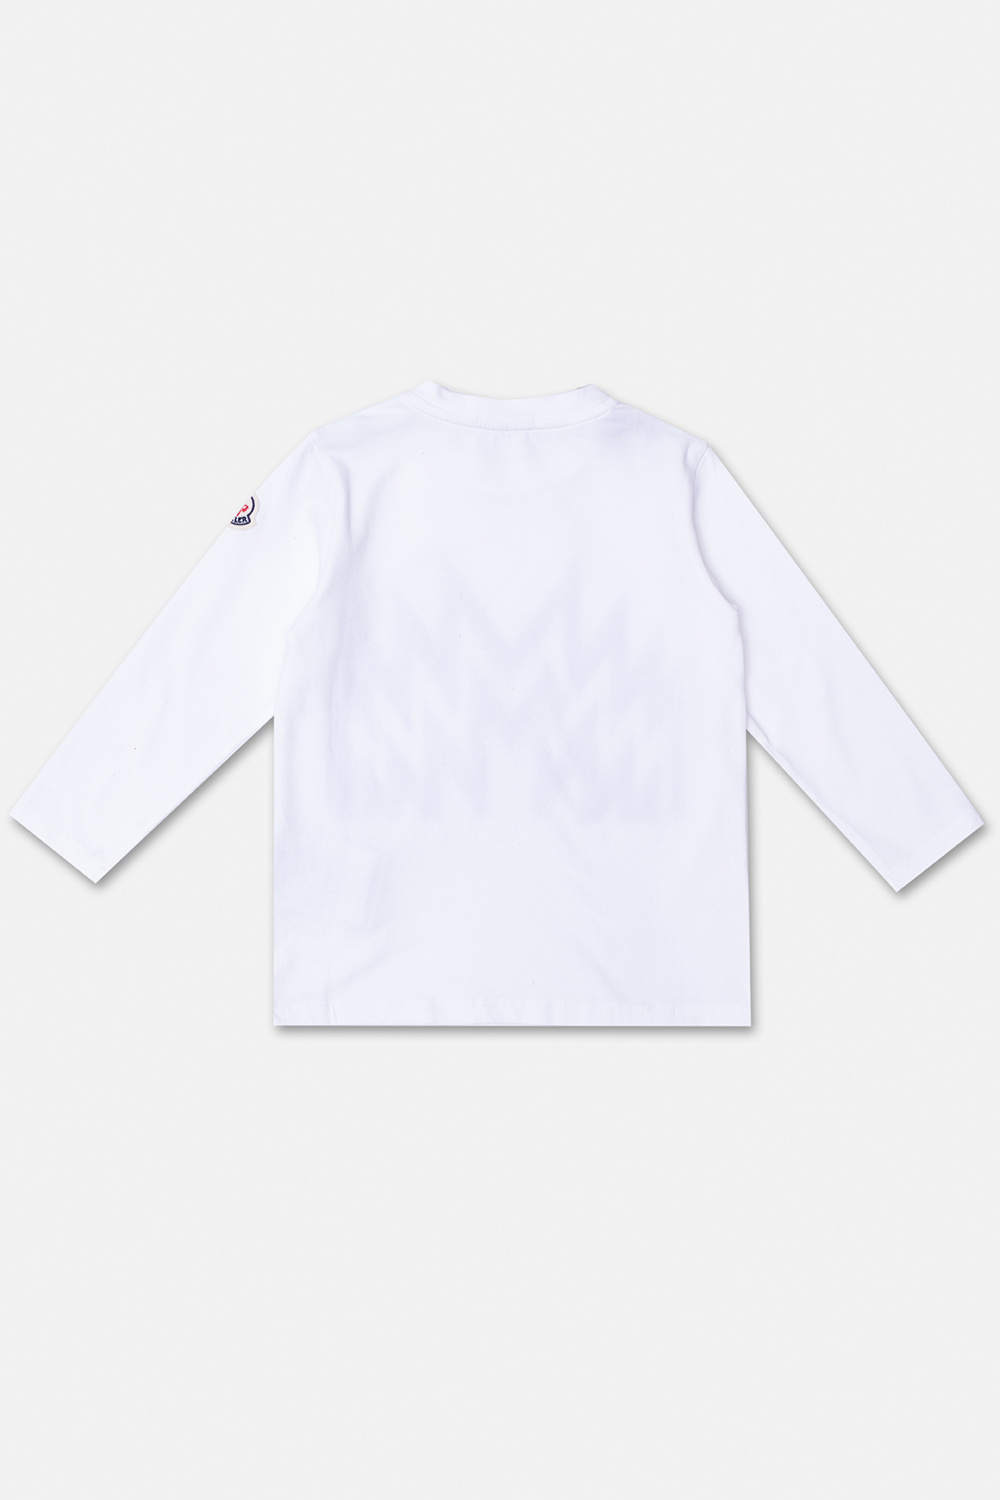 Moncler Enfant Sweatshirt adidas Karlie Kloss branco mulher